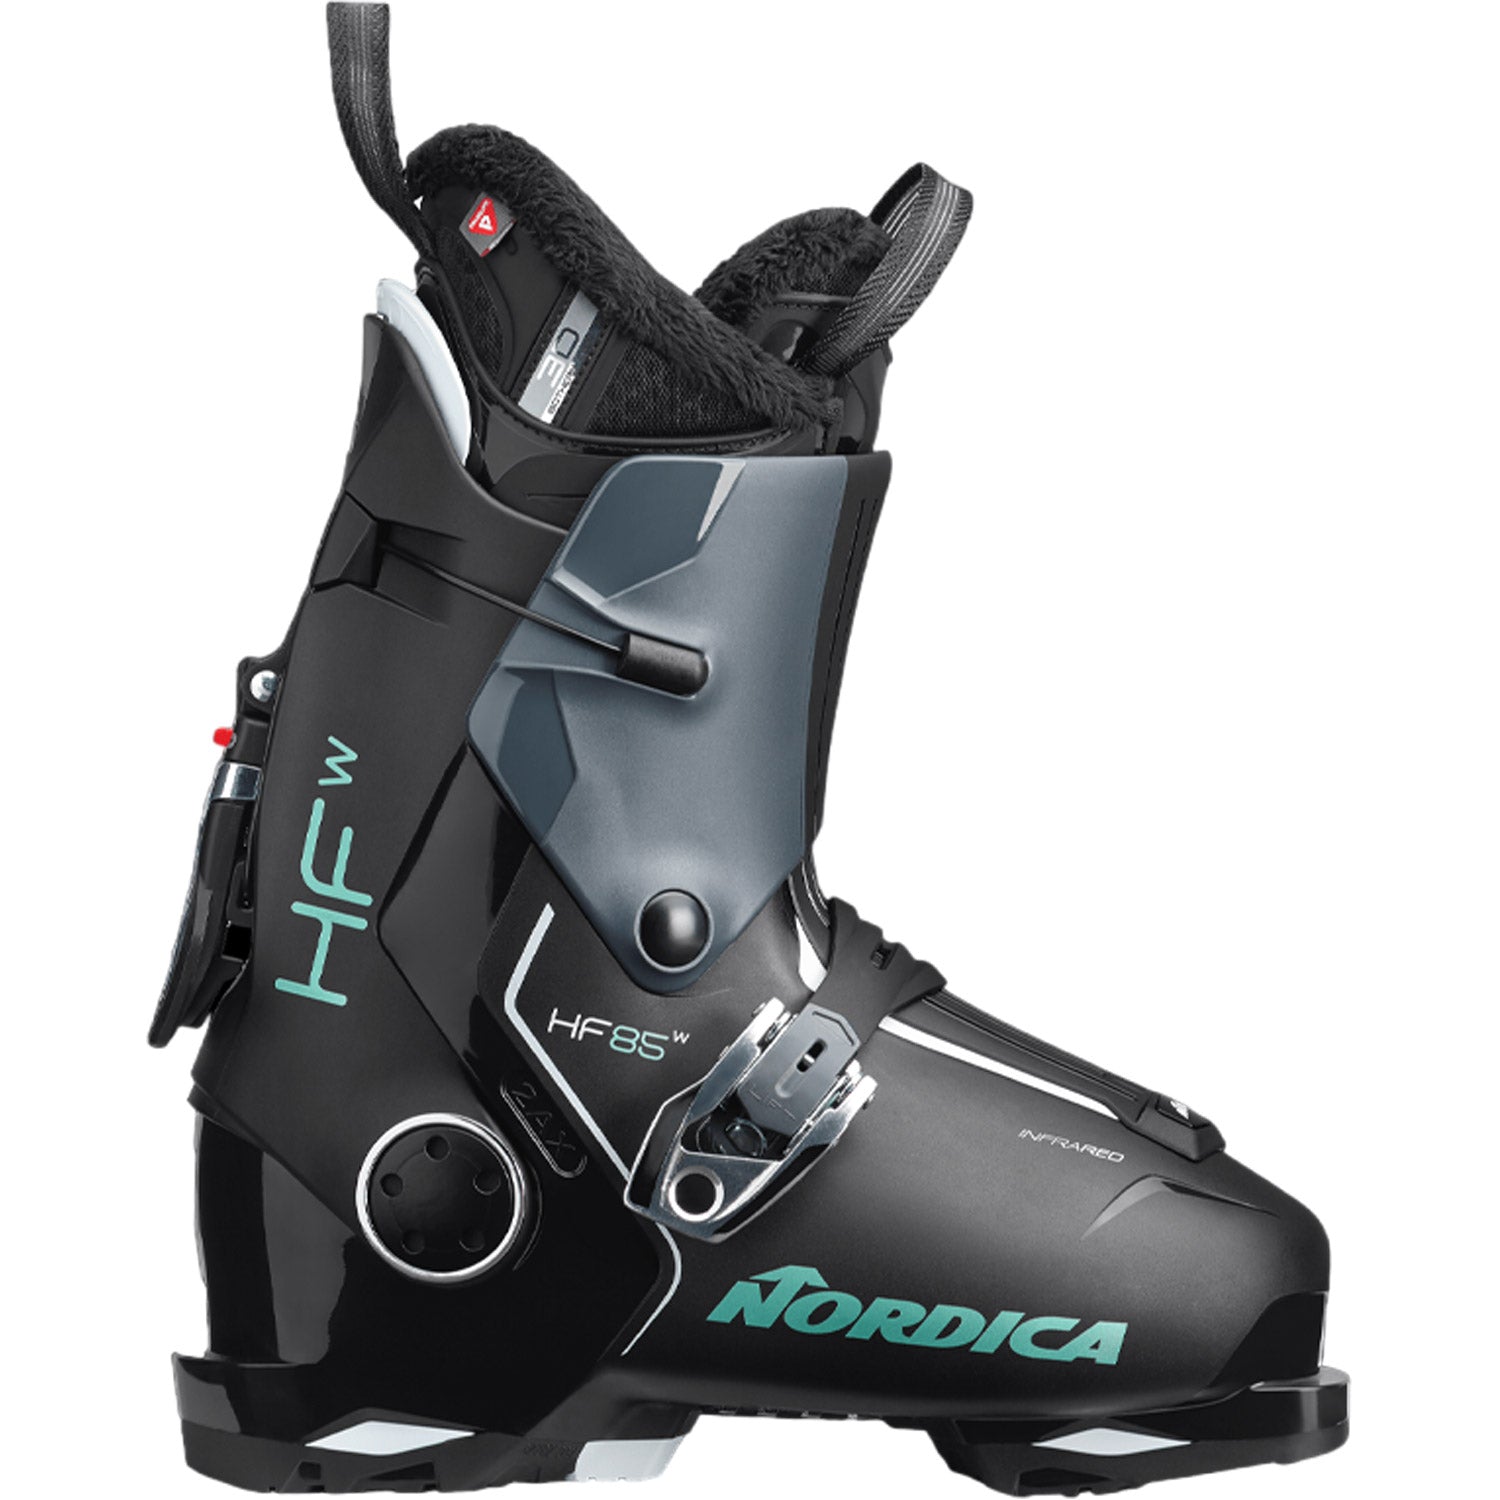 HF 85W Ski Boots